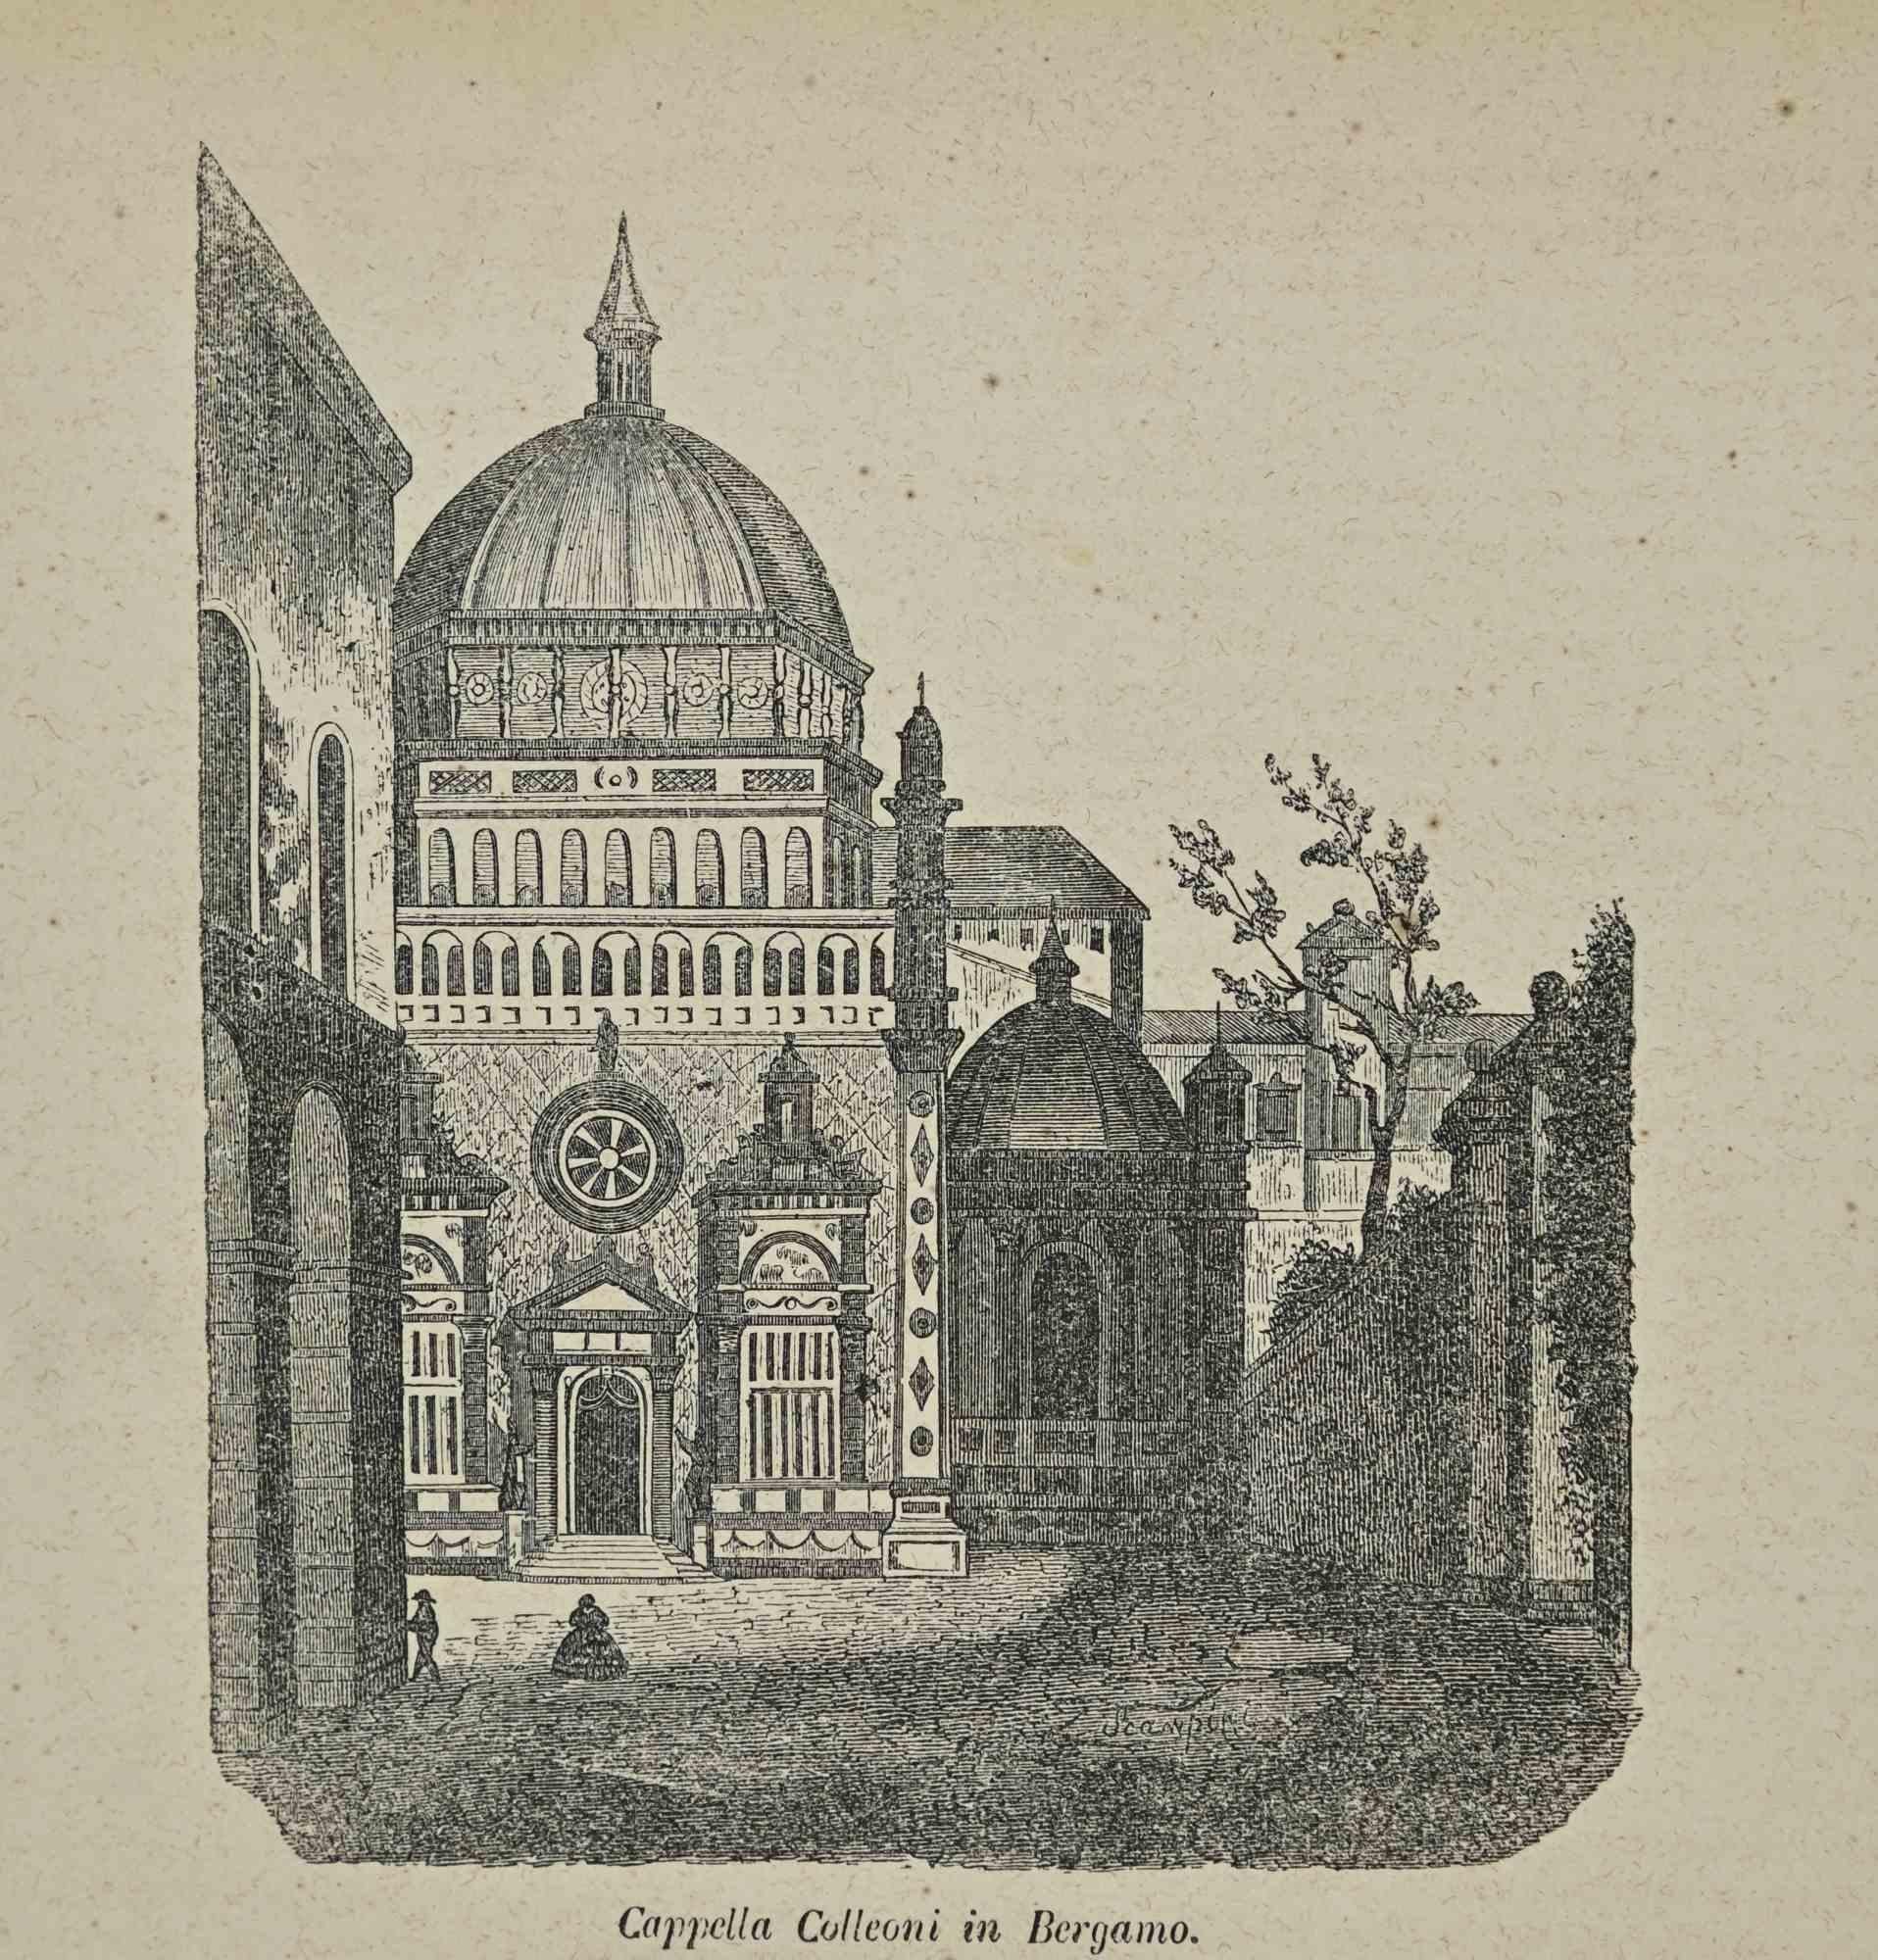 Uses and Customs - Colleoni Chapel in Bergamo - Lithograph - 1862